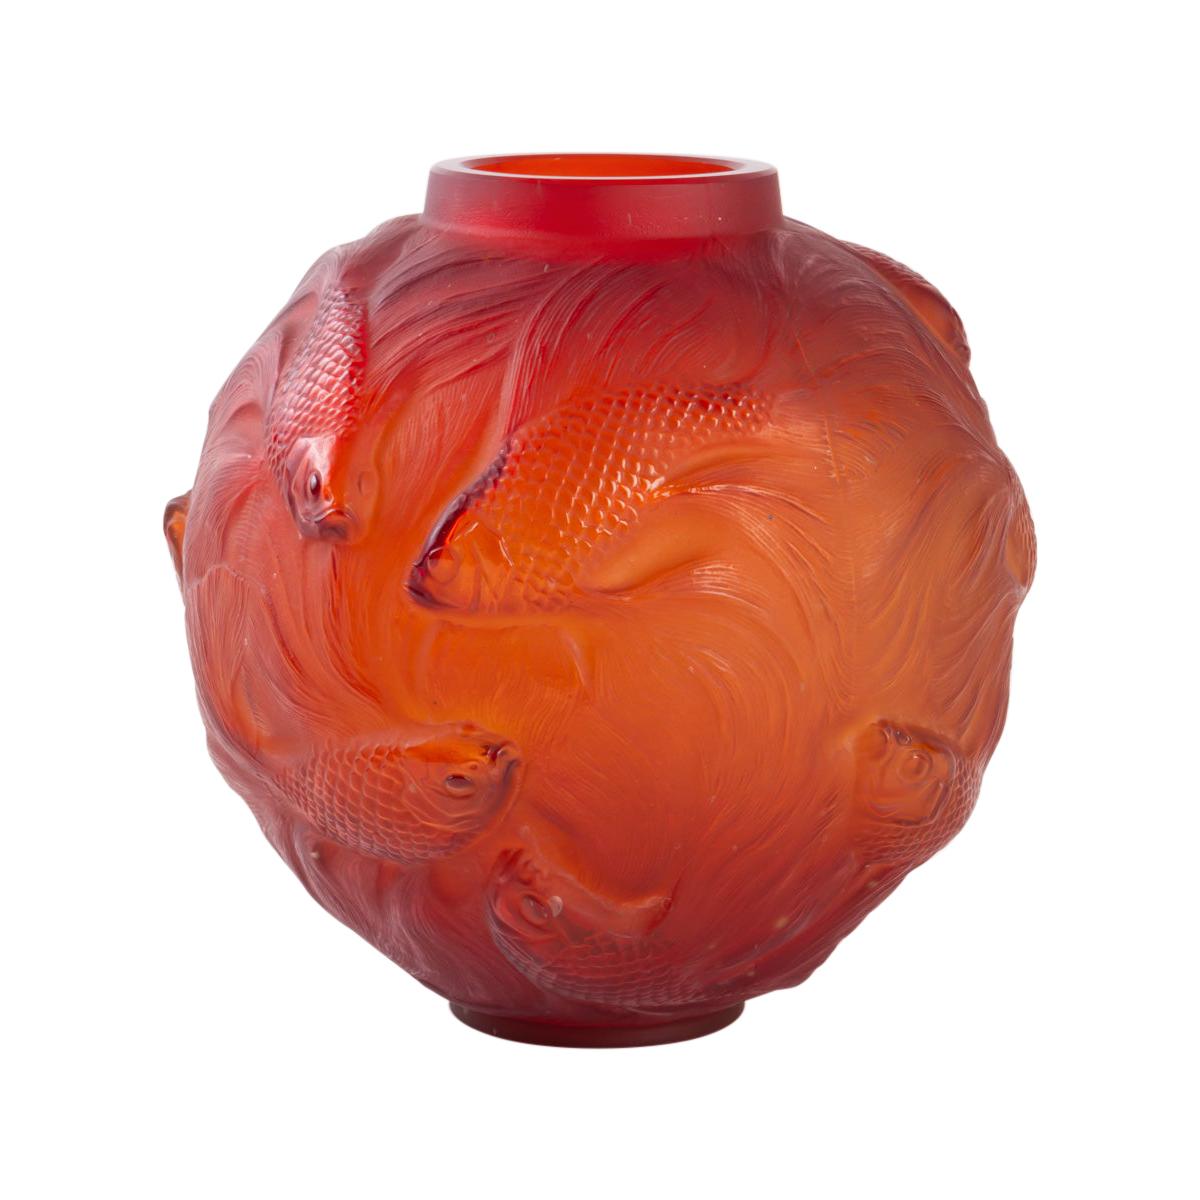 1924 Rene Lalique Formose Vase in Double Cased Red Orange Glass, Fishes Design